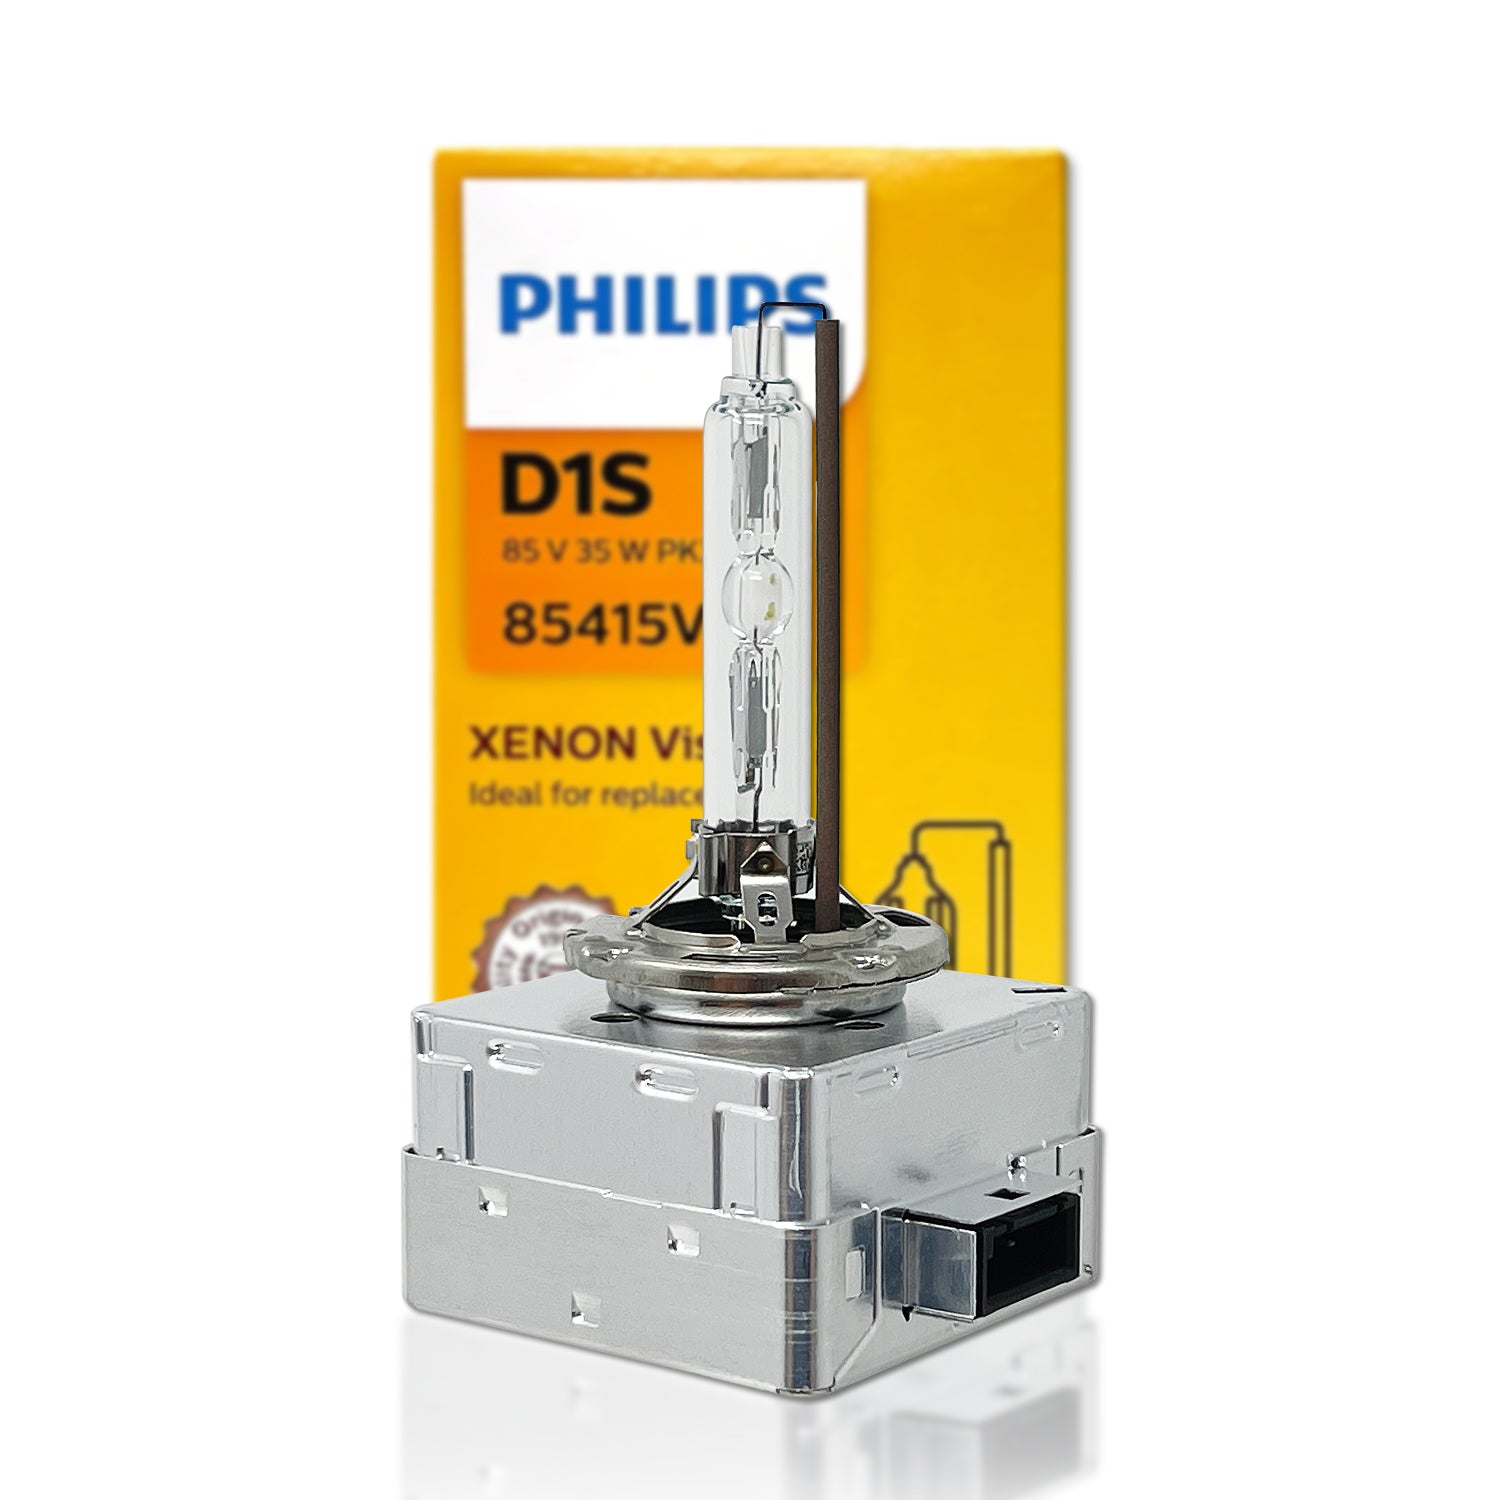 Philips D1S 35W Single Xenon HID Headlight Bulb (Pack of 1)